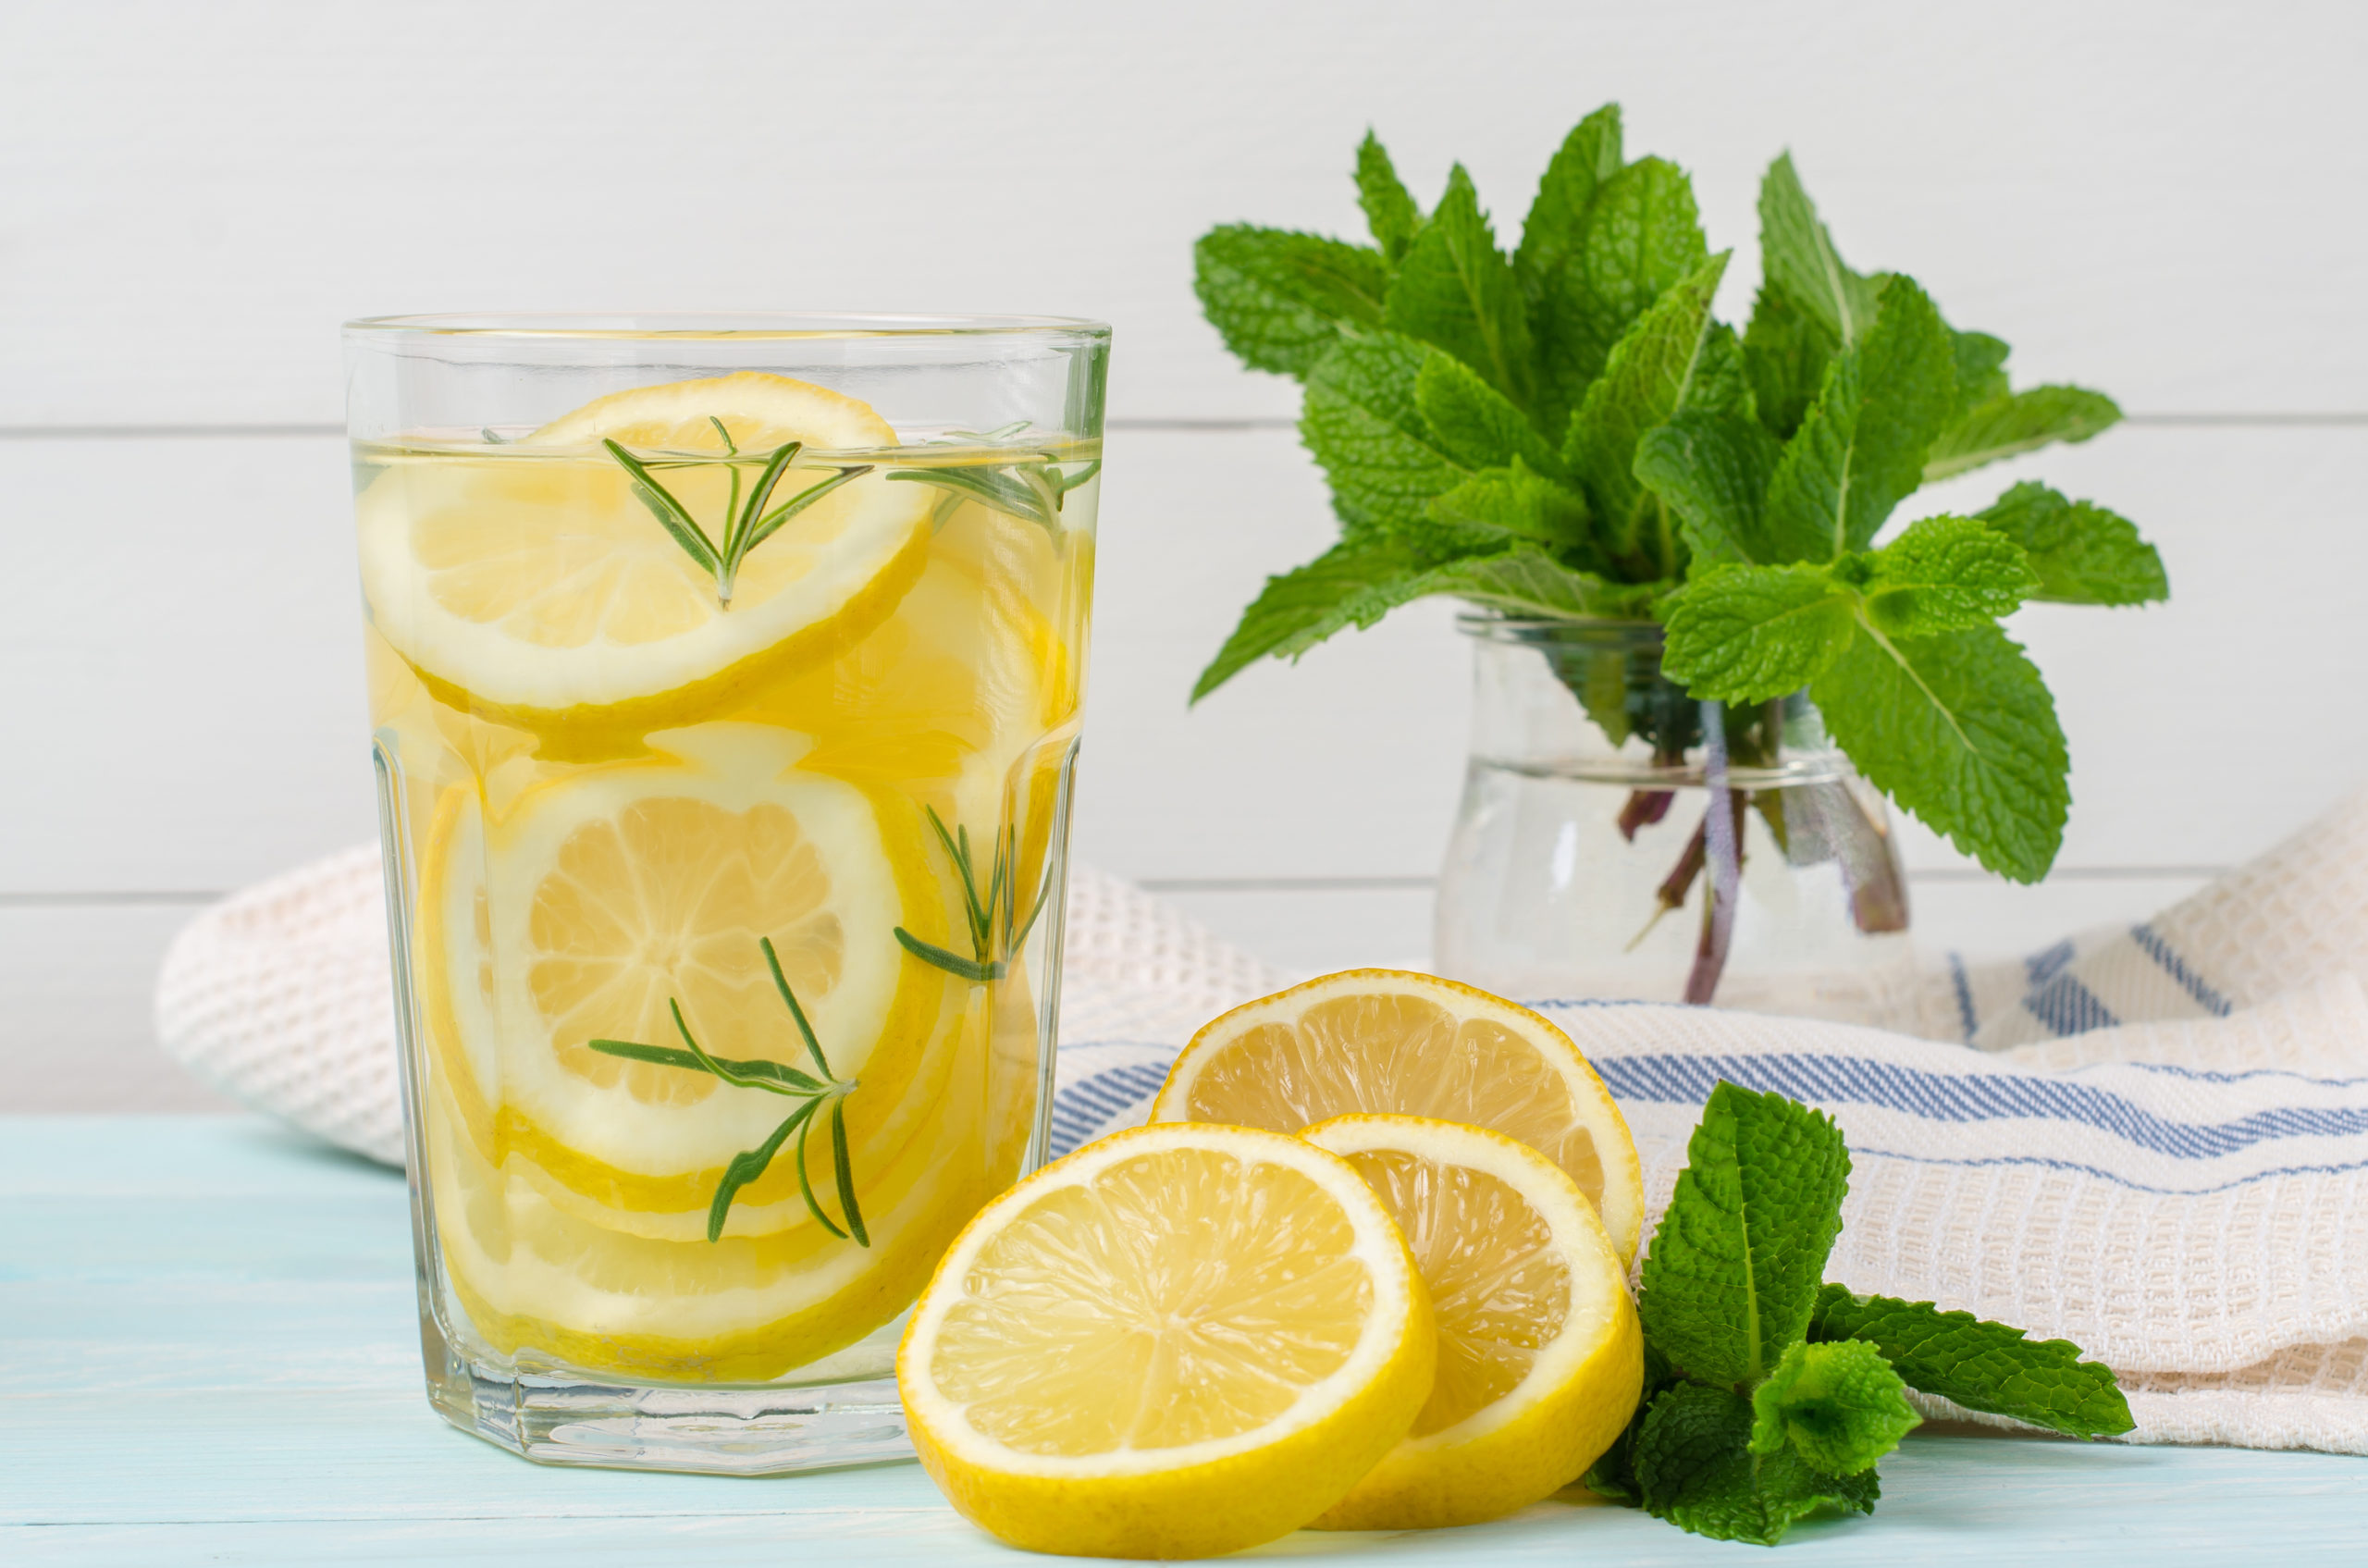 Agua De Manzana 🍎 Natural Y Súper Refrescante 🥤🧊😋 